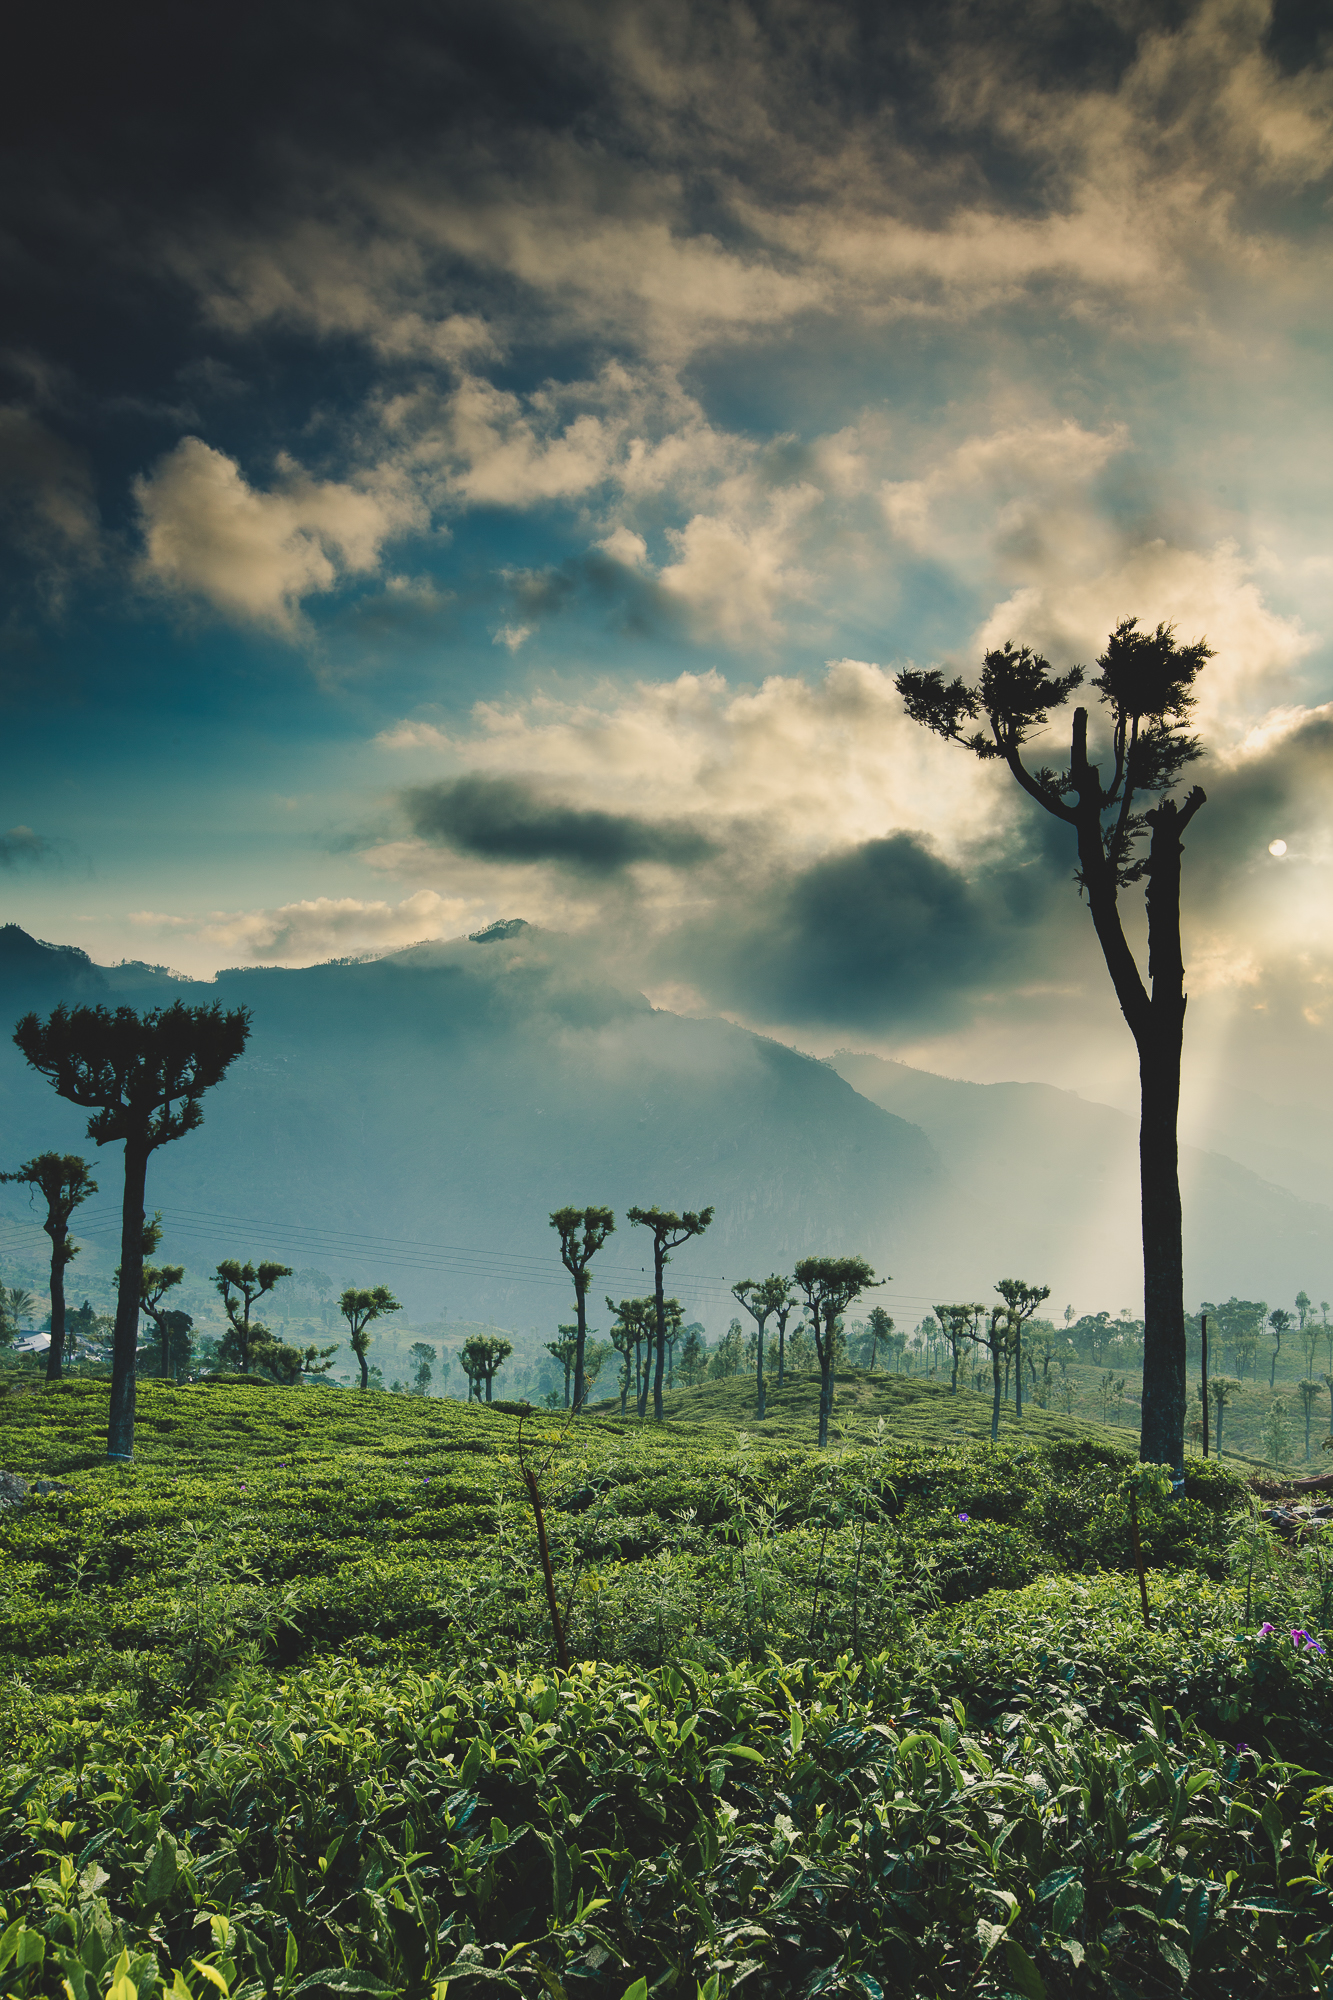 A Landscape of tea plantations